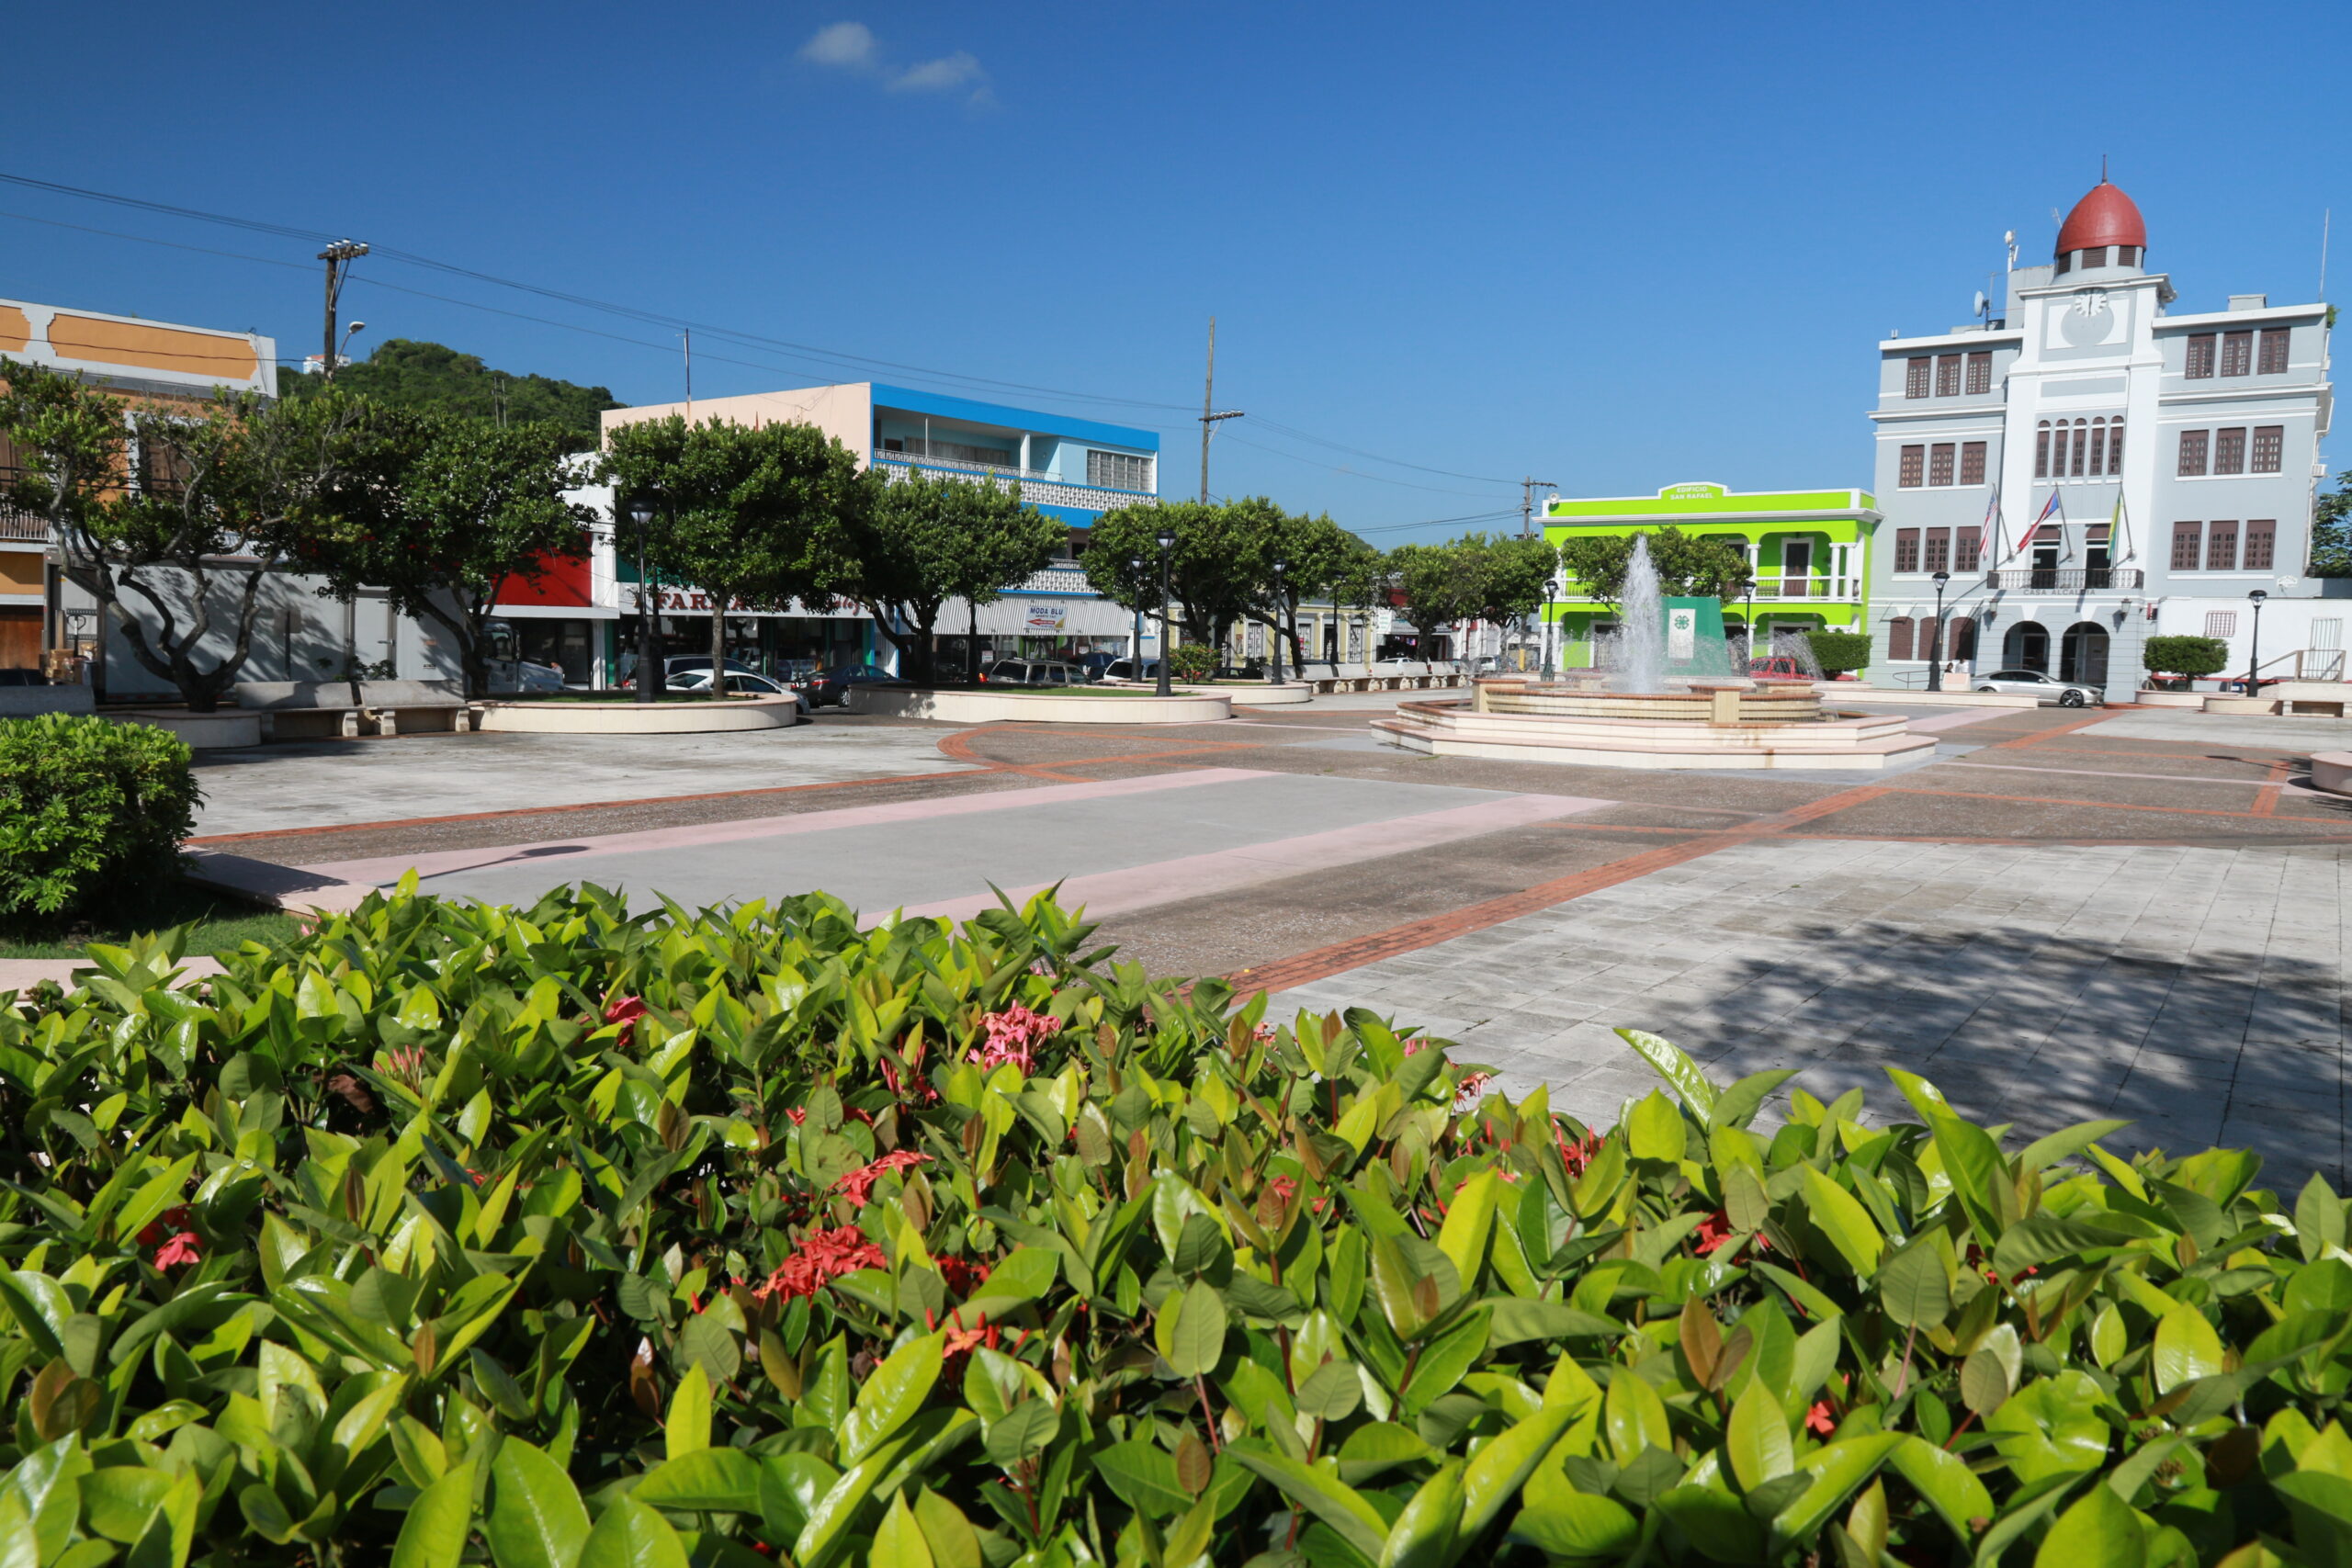 Plaza pública José Francisco Náter de Vega Baja. (Foto: Discover Puerto Rico)